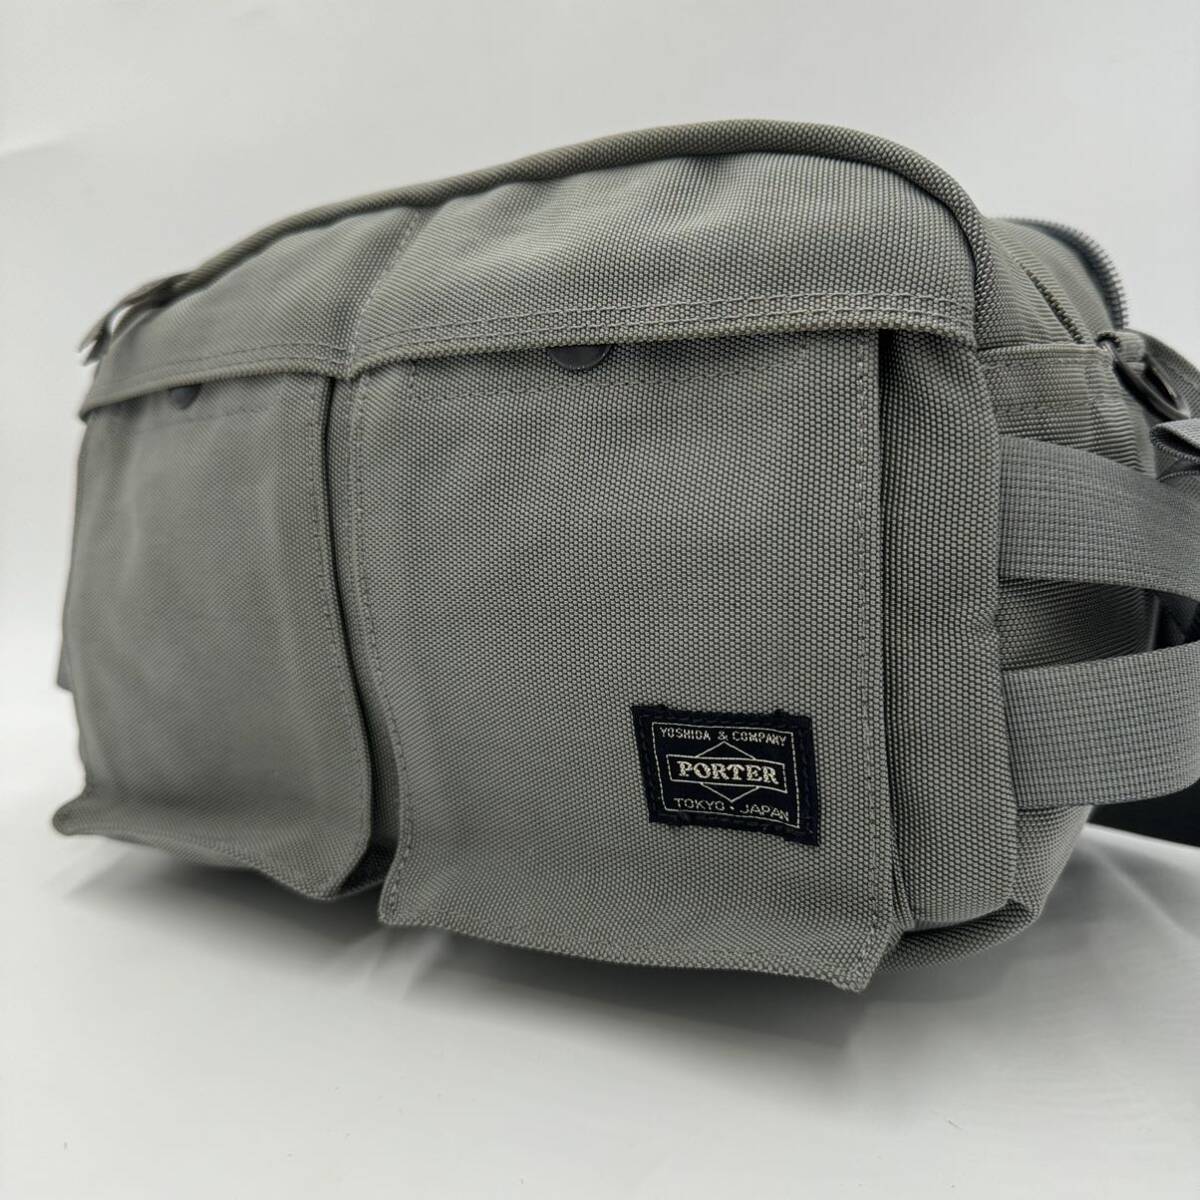 I * popular model!! \' made in Japan \' PORTER Porter body bag waist bag Yoshida bag grey GRY men's gentleman bag business casual 